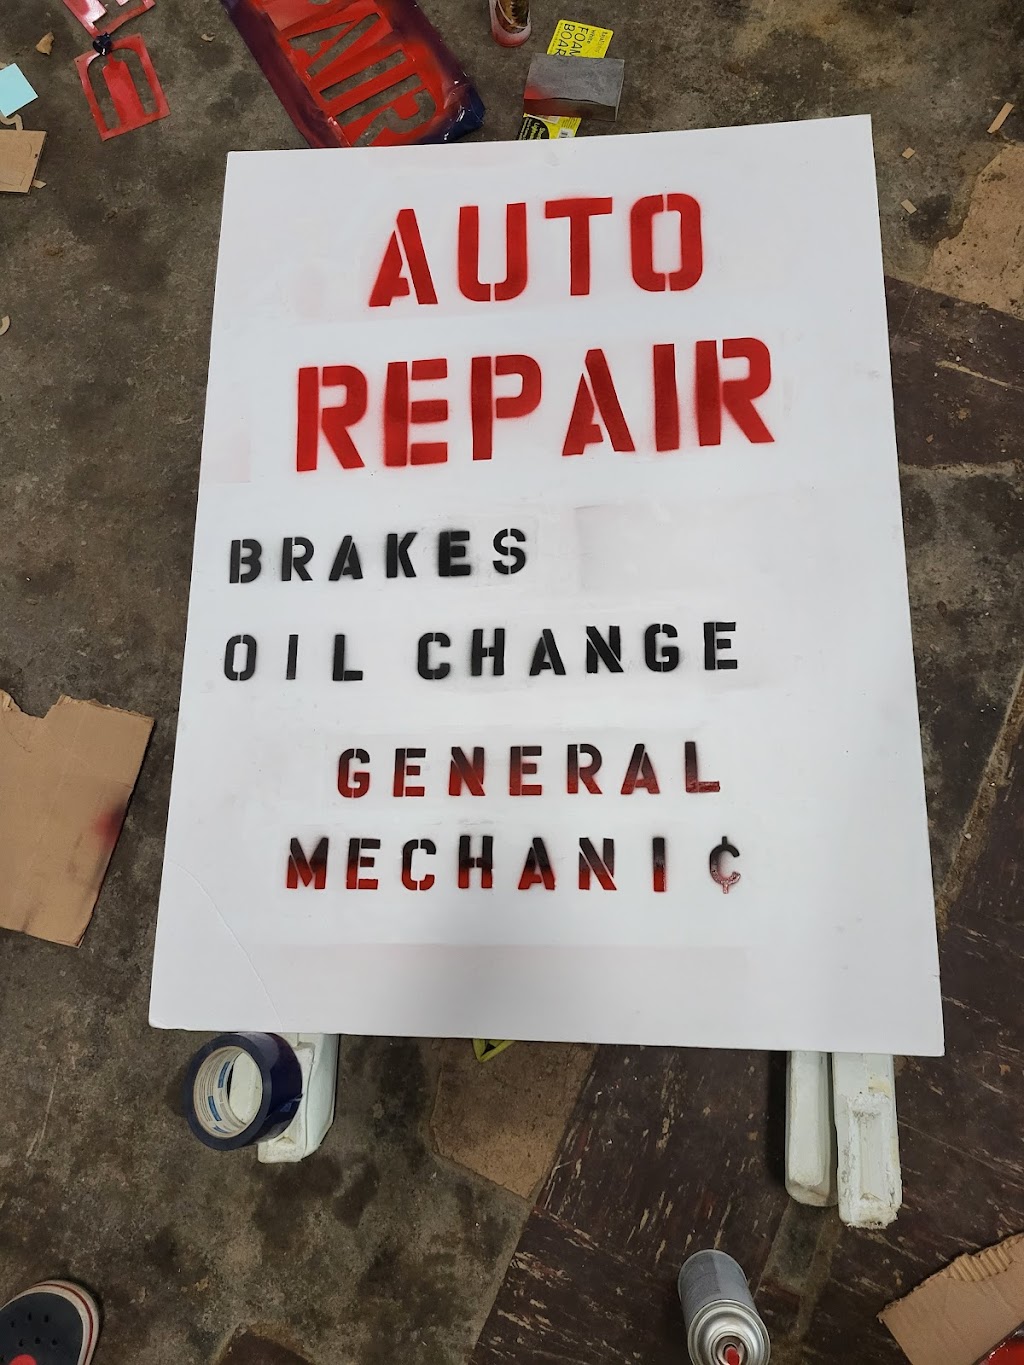 Auto repair | 2020 W Hunting Park Ave, Philadelphia, PA 19140 | Phone: (267) 770-3110